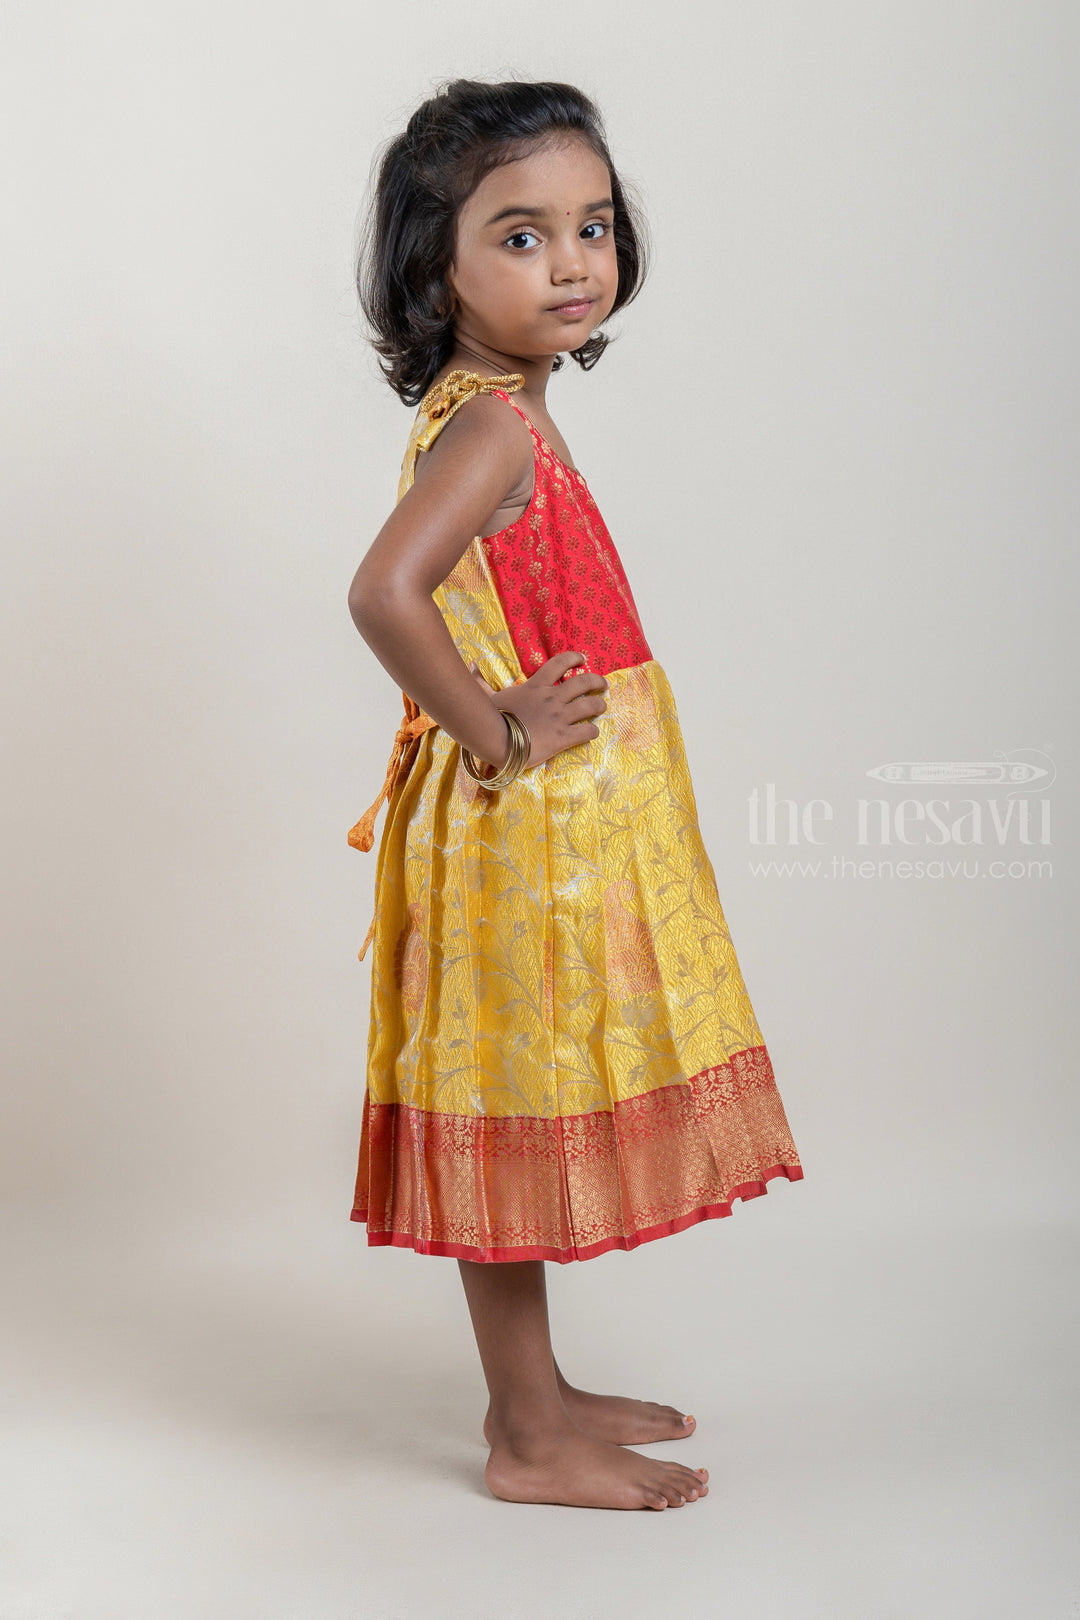 The Nesavu Tie-up Frock Pink And Yellow Banaras Silk Tie-Up Frocks With Korva Border For Little Girls psr silks Nesavu